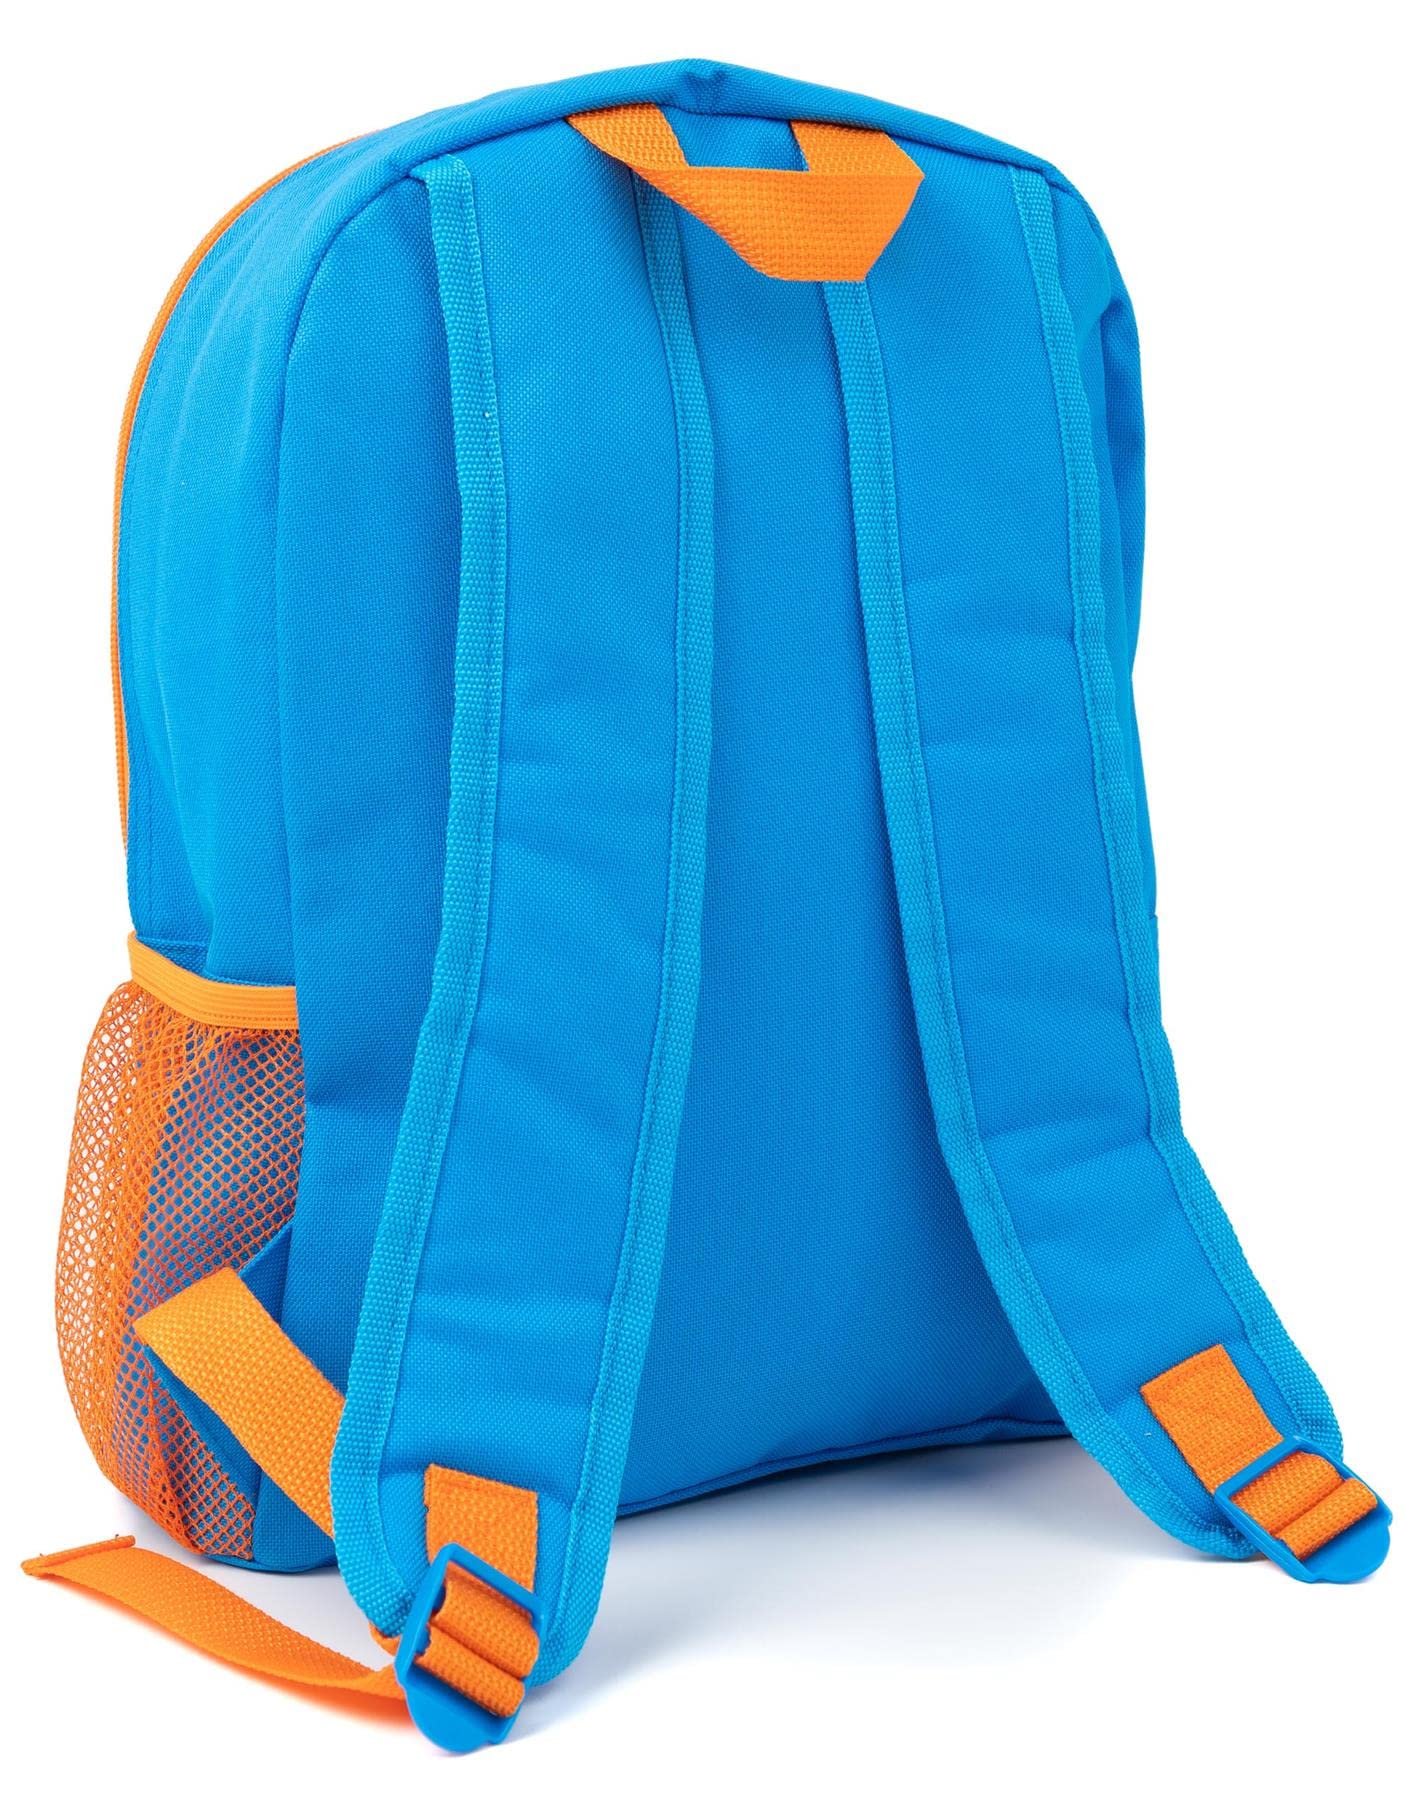 Hot Wheels Kids Backpack | Girls Boys Orange Blue Car Race Wheels Rucksack | Luggage Sports School Bag with Adjustable Straps | Racer Merchandise Gifts